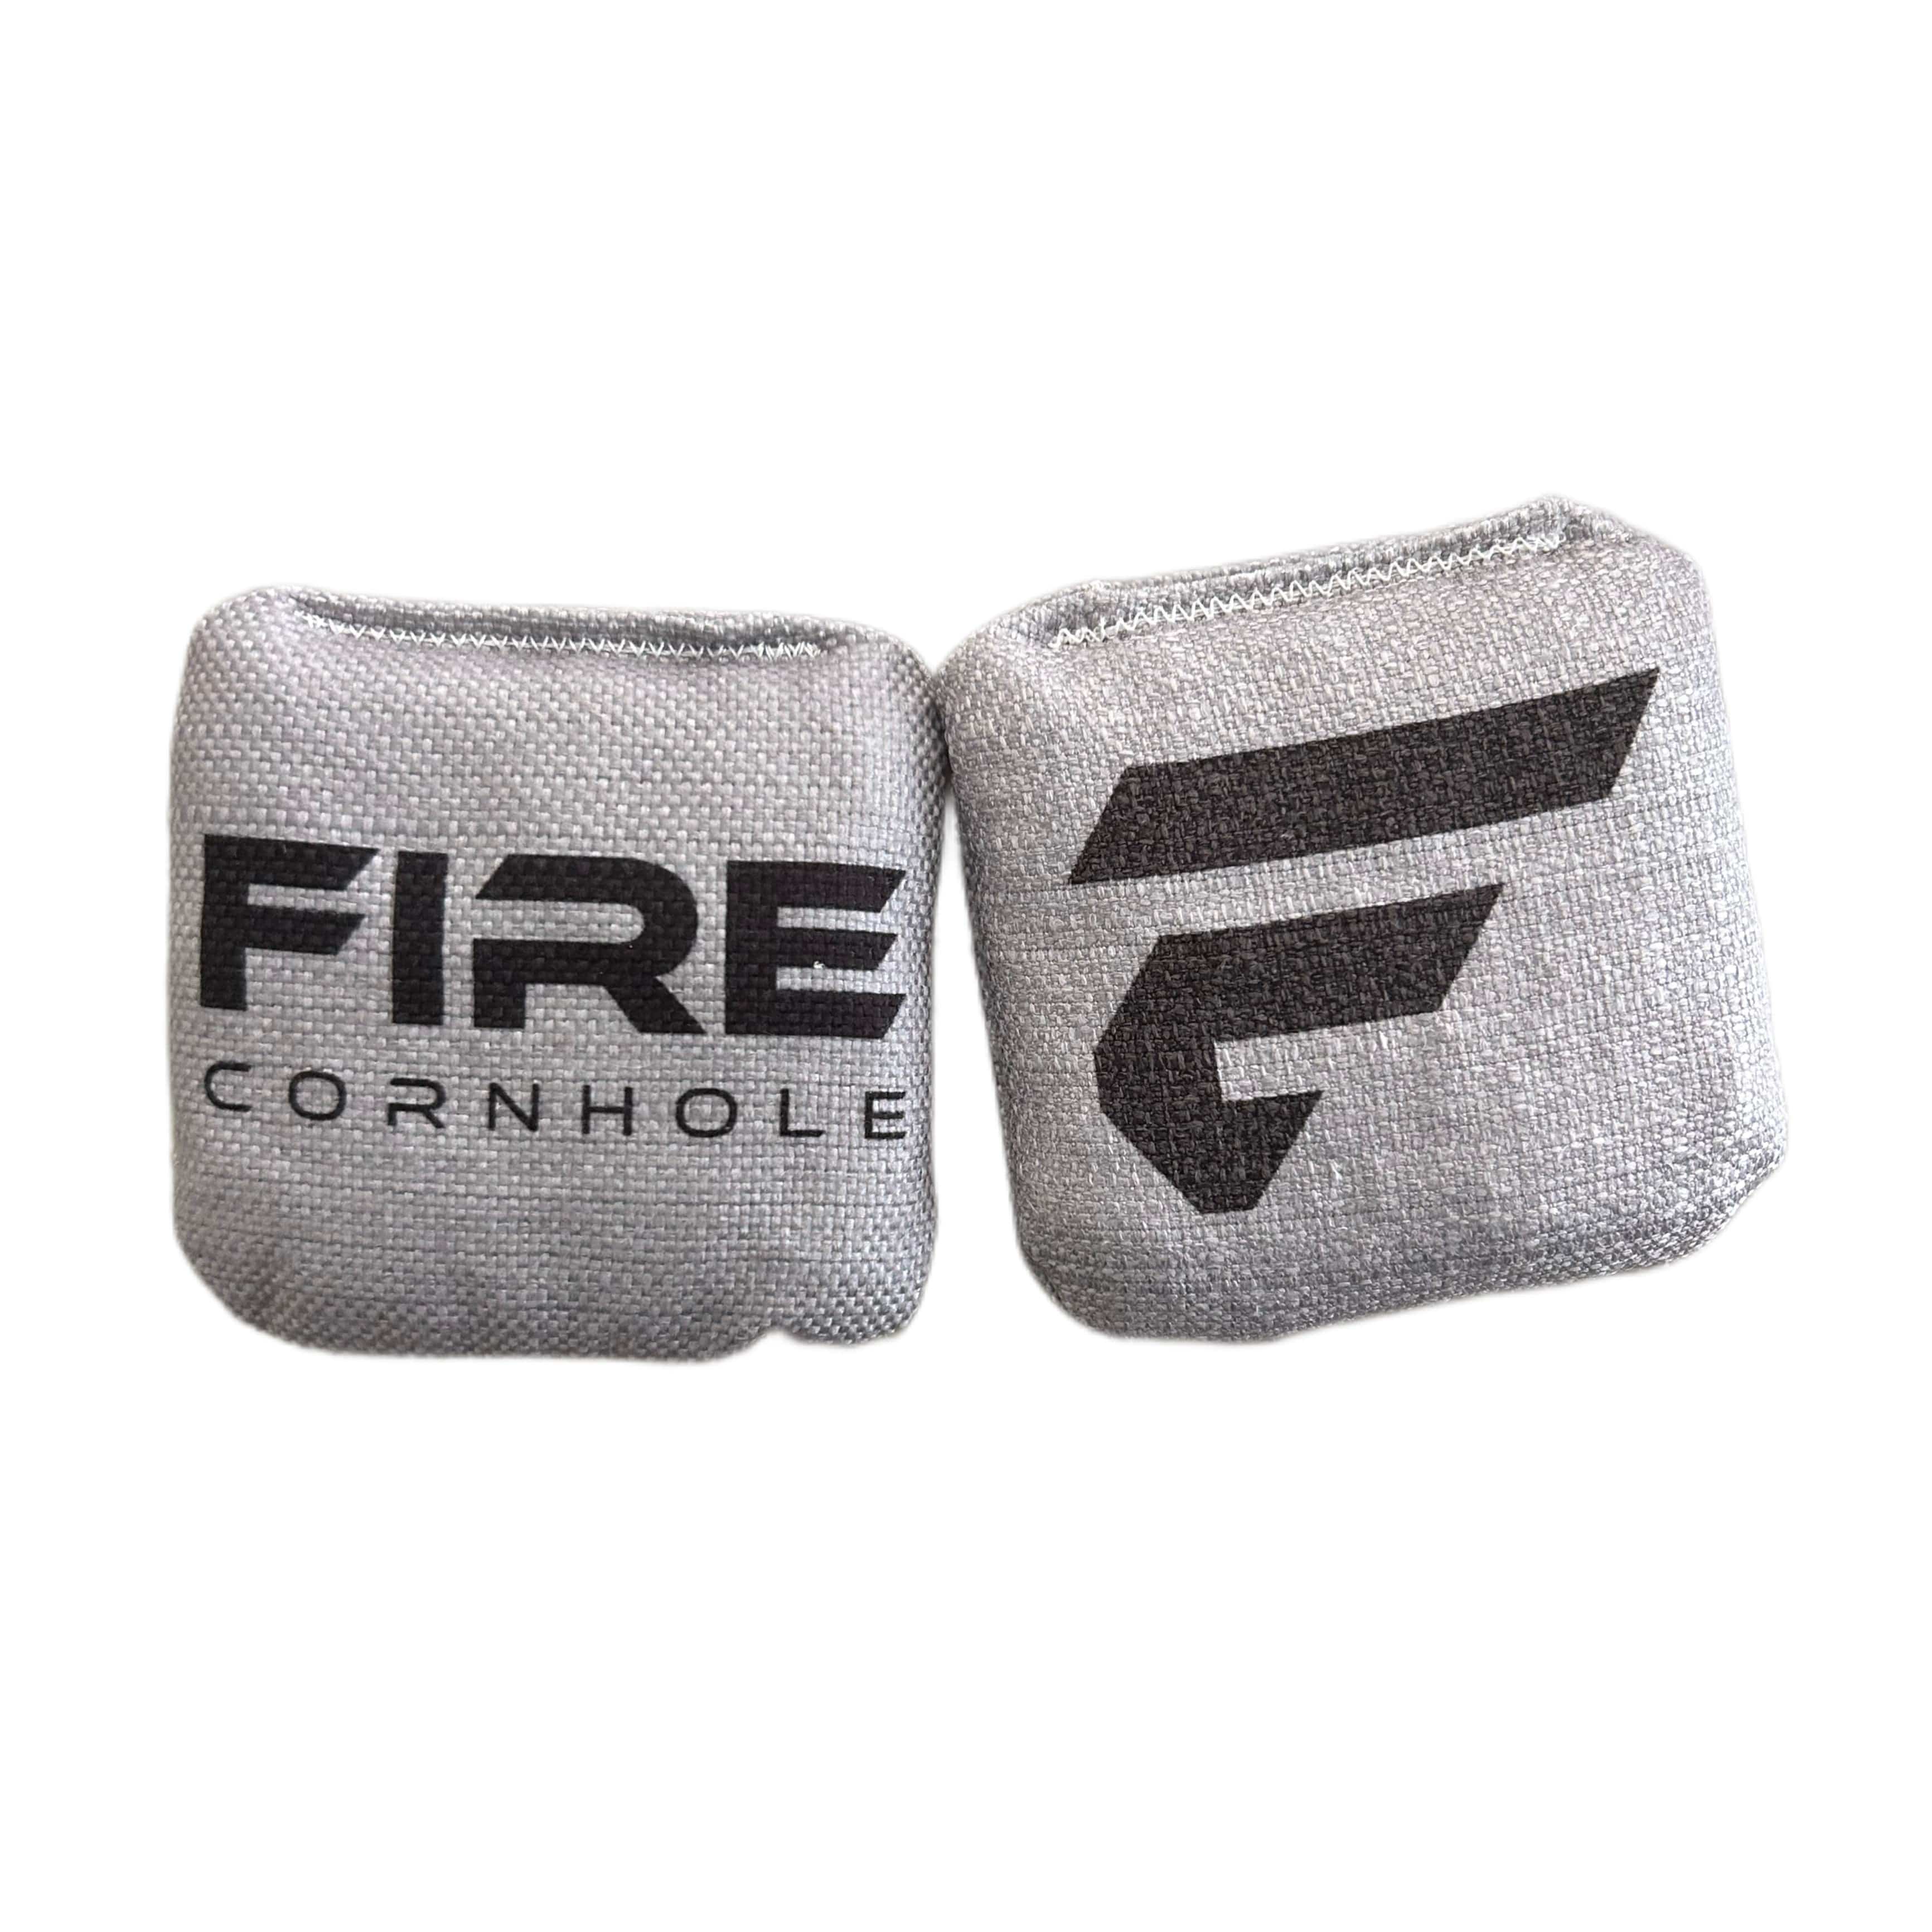 Fire Cornhole Mini Cornhole Bags Silver - Set of 4